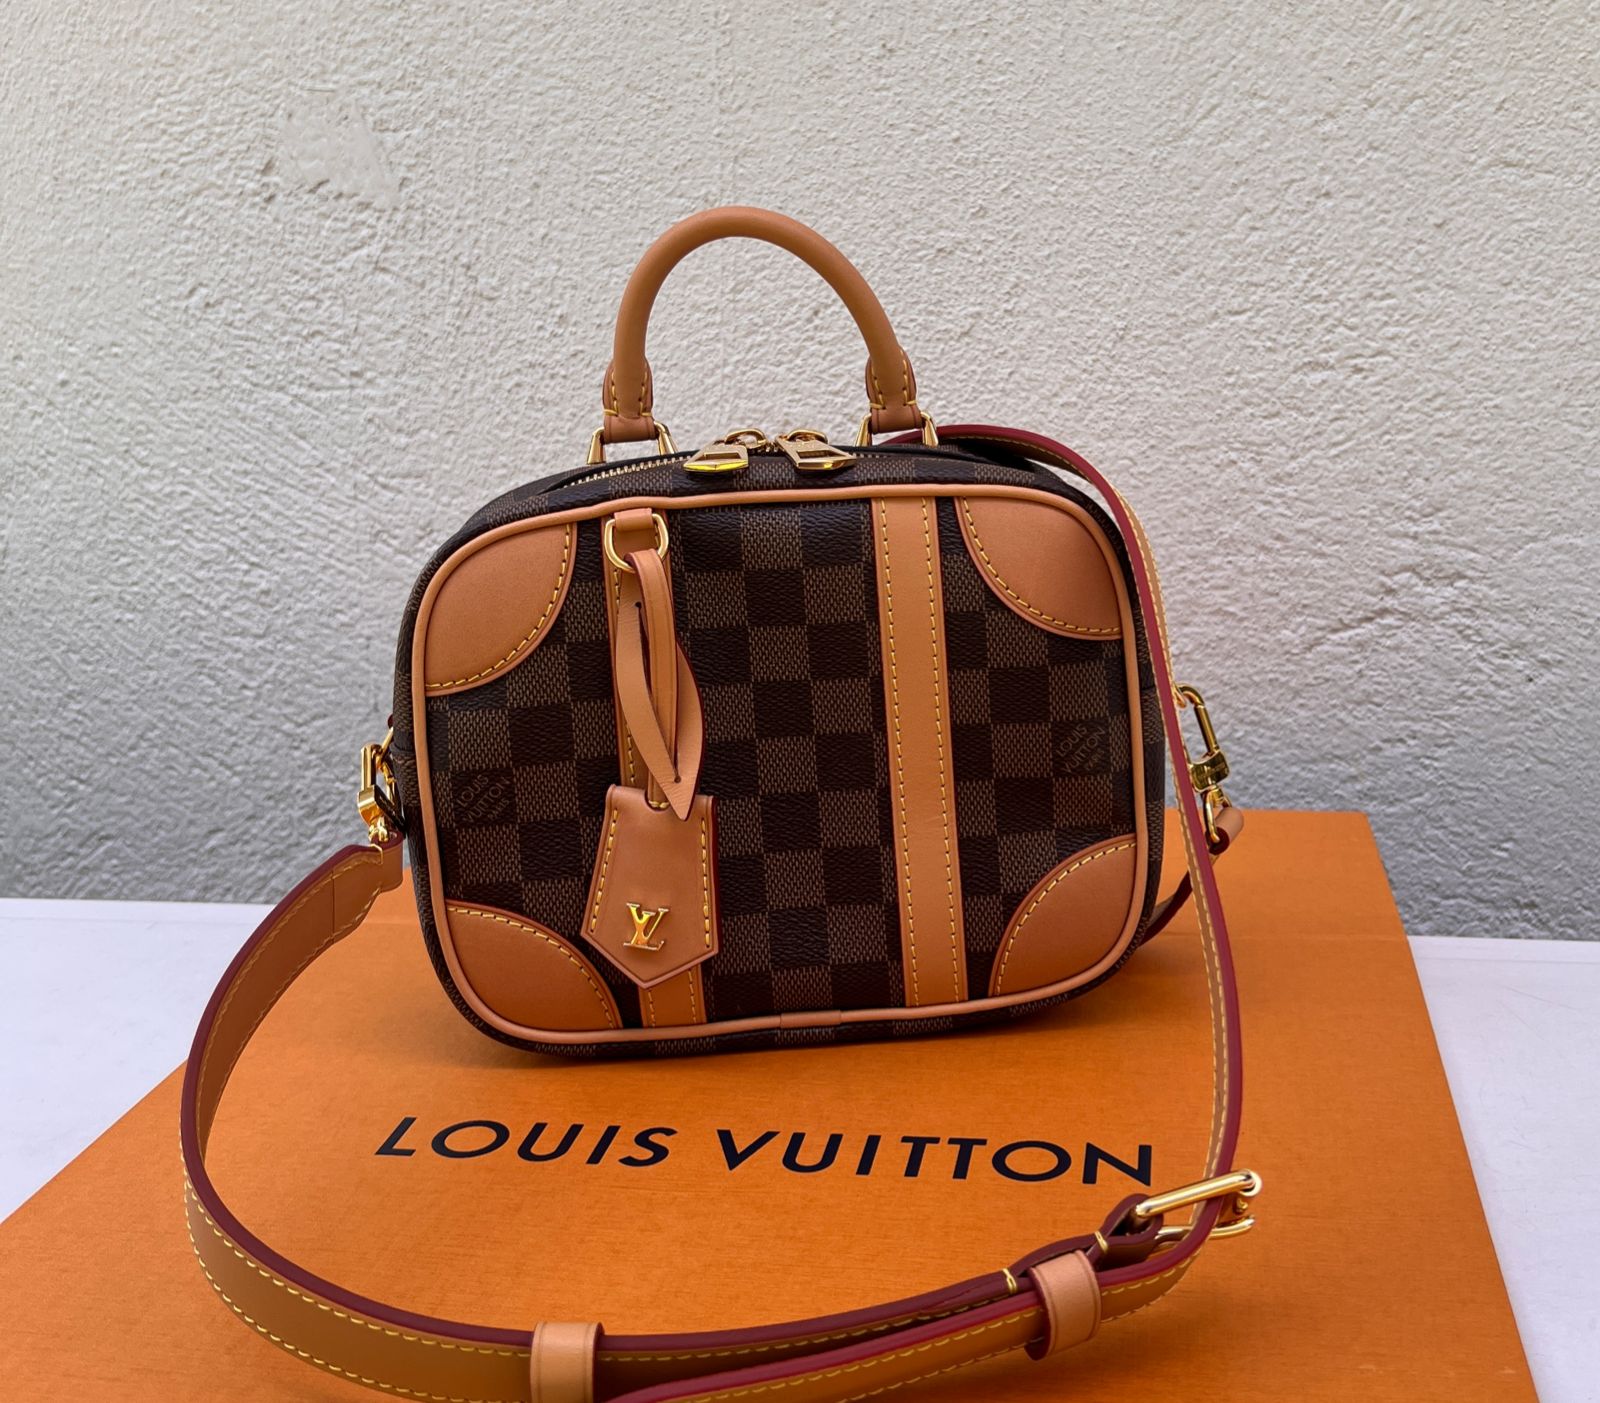 VALISETTE SOUPLE BB Luxury Handbag Ladies Crossbody Bags With Gift Box From  Handbag8886, $76.02